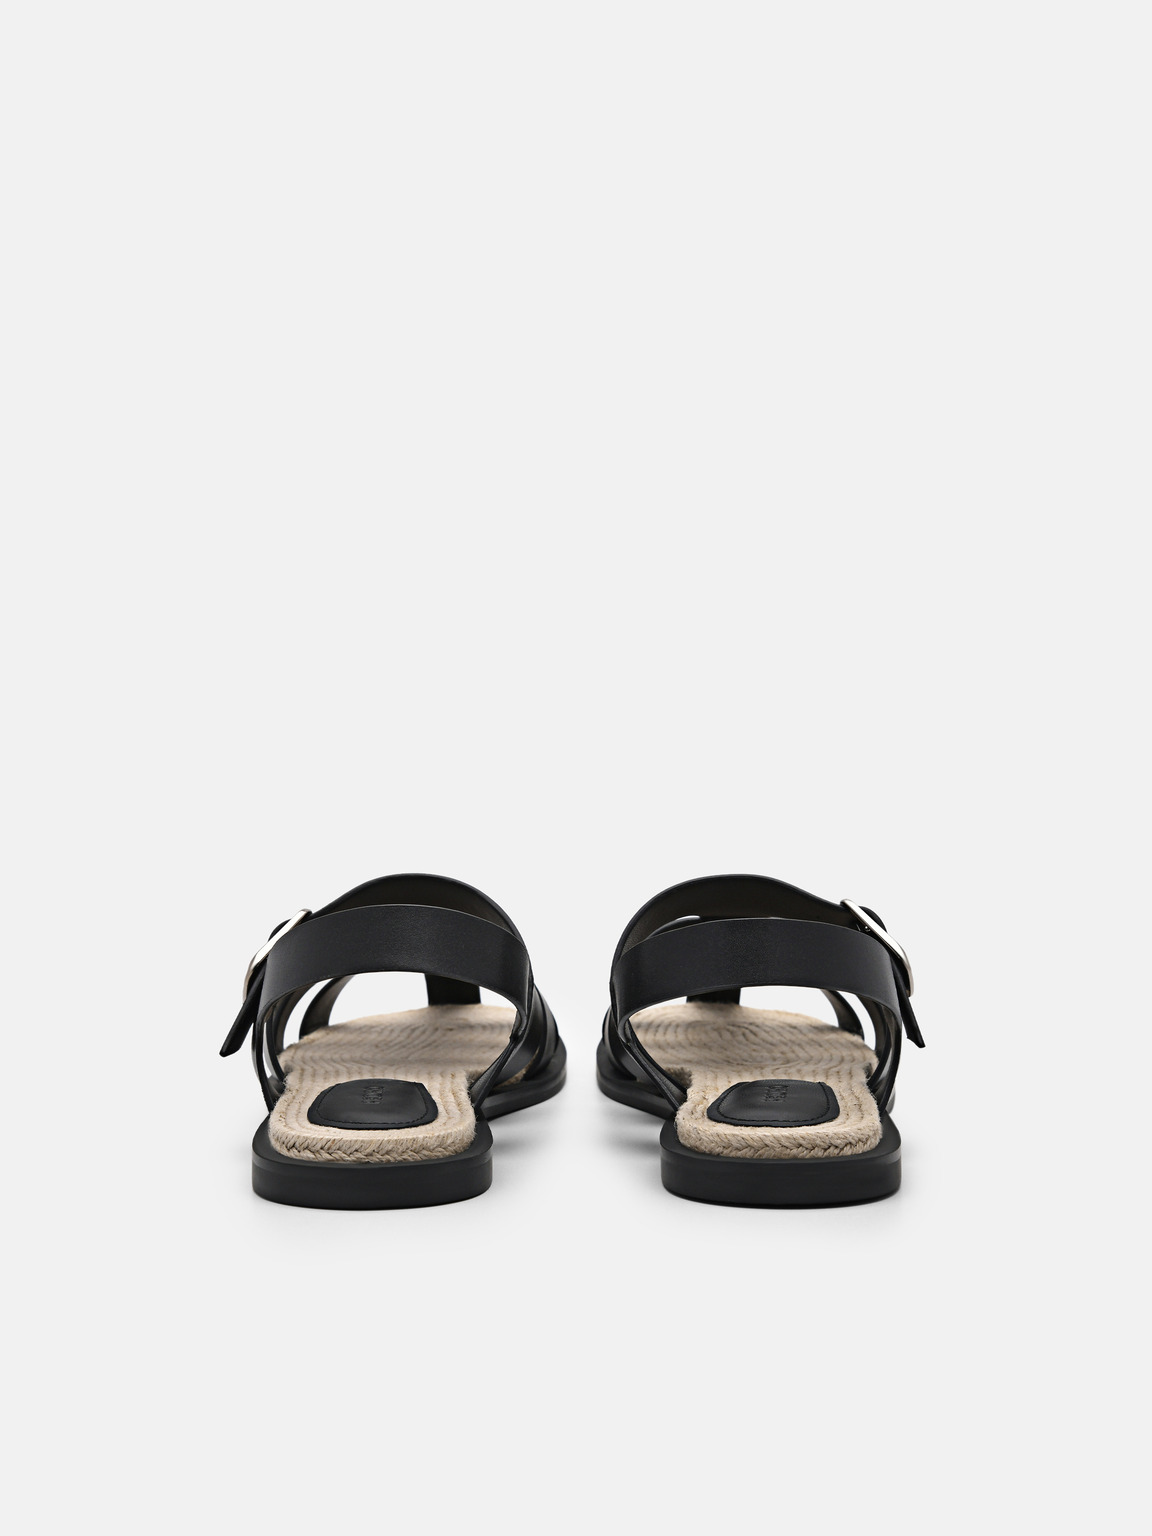 Riata Slingback Sandals, Black